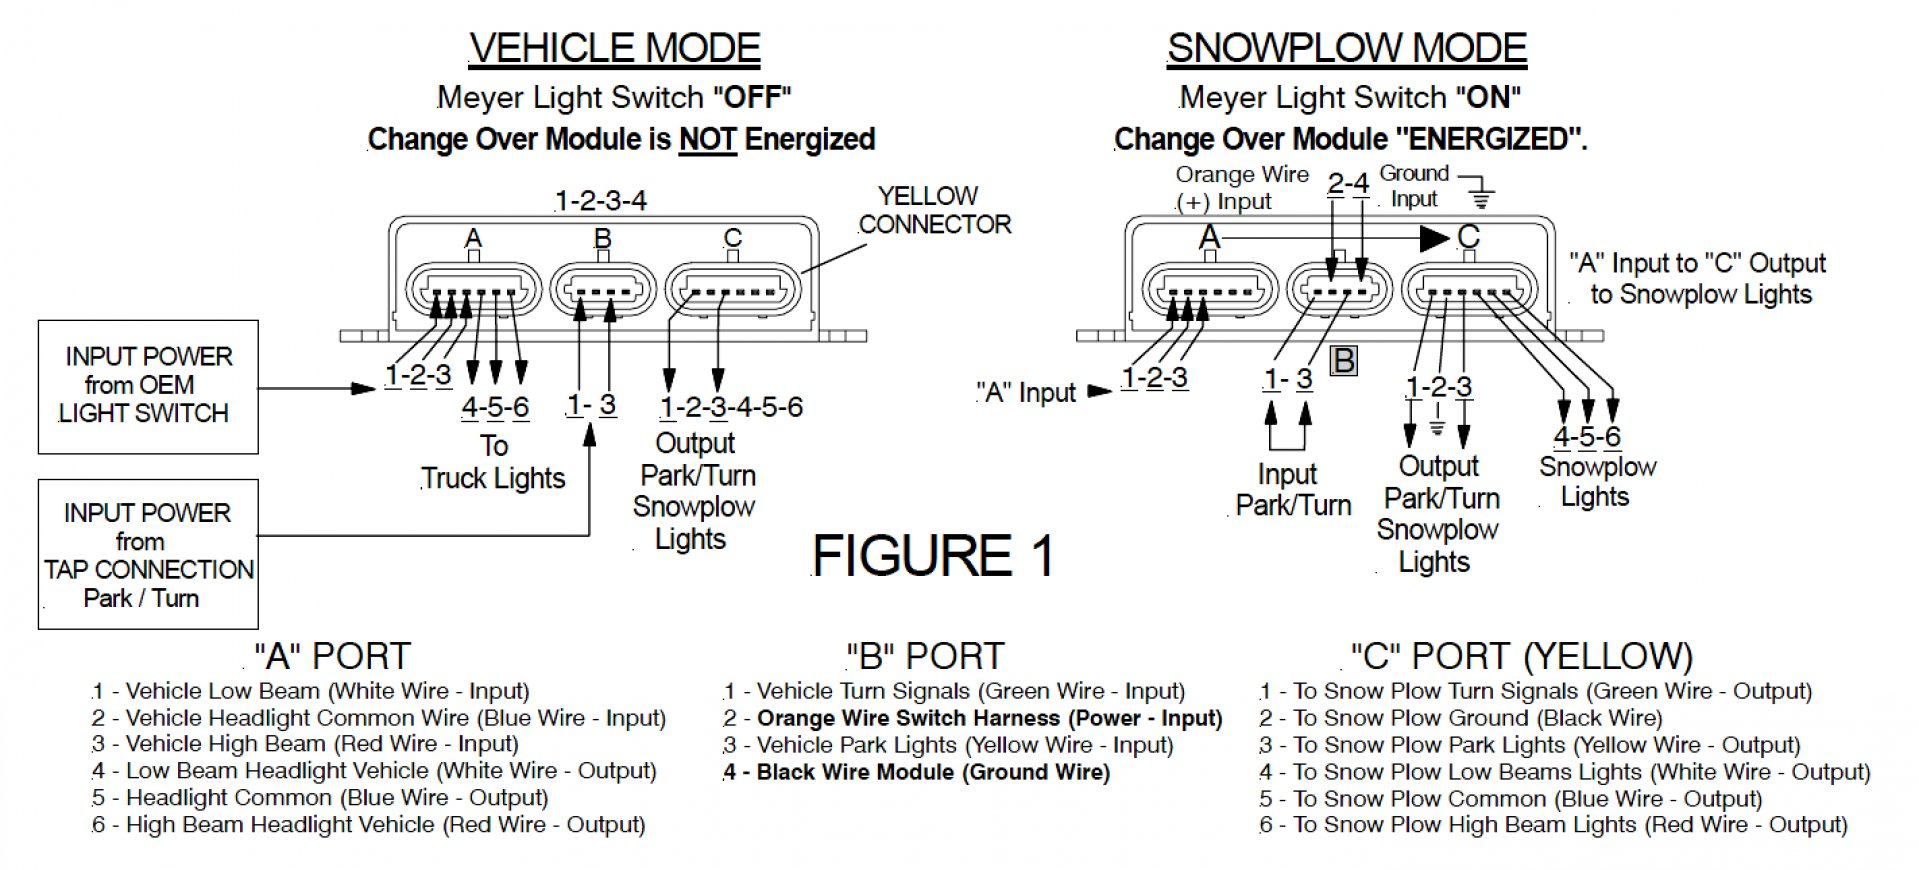 Meyer Snow Plow Lights Wiring Diagram 2002 | Wiring Diagram - Meyers Snow Plow Wiring Diagram